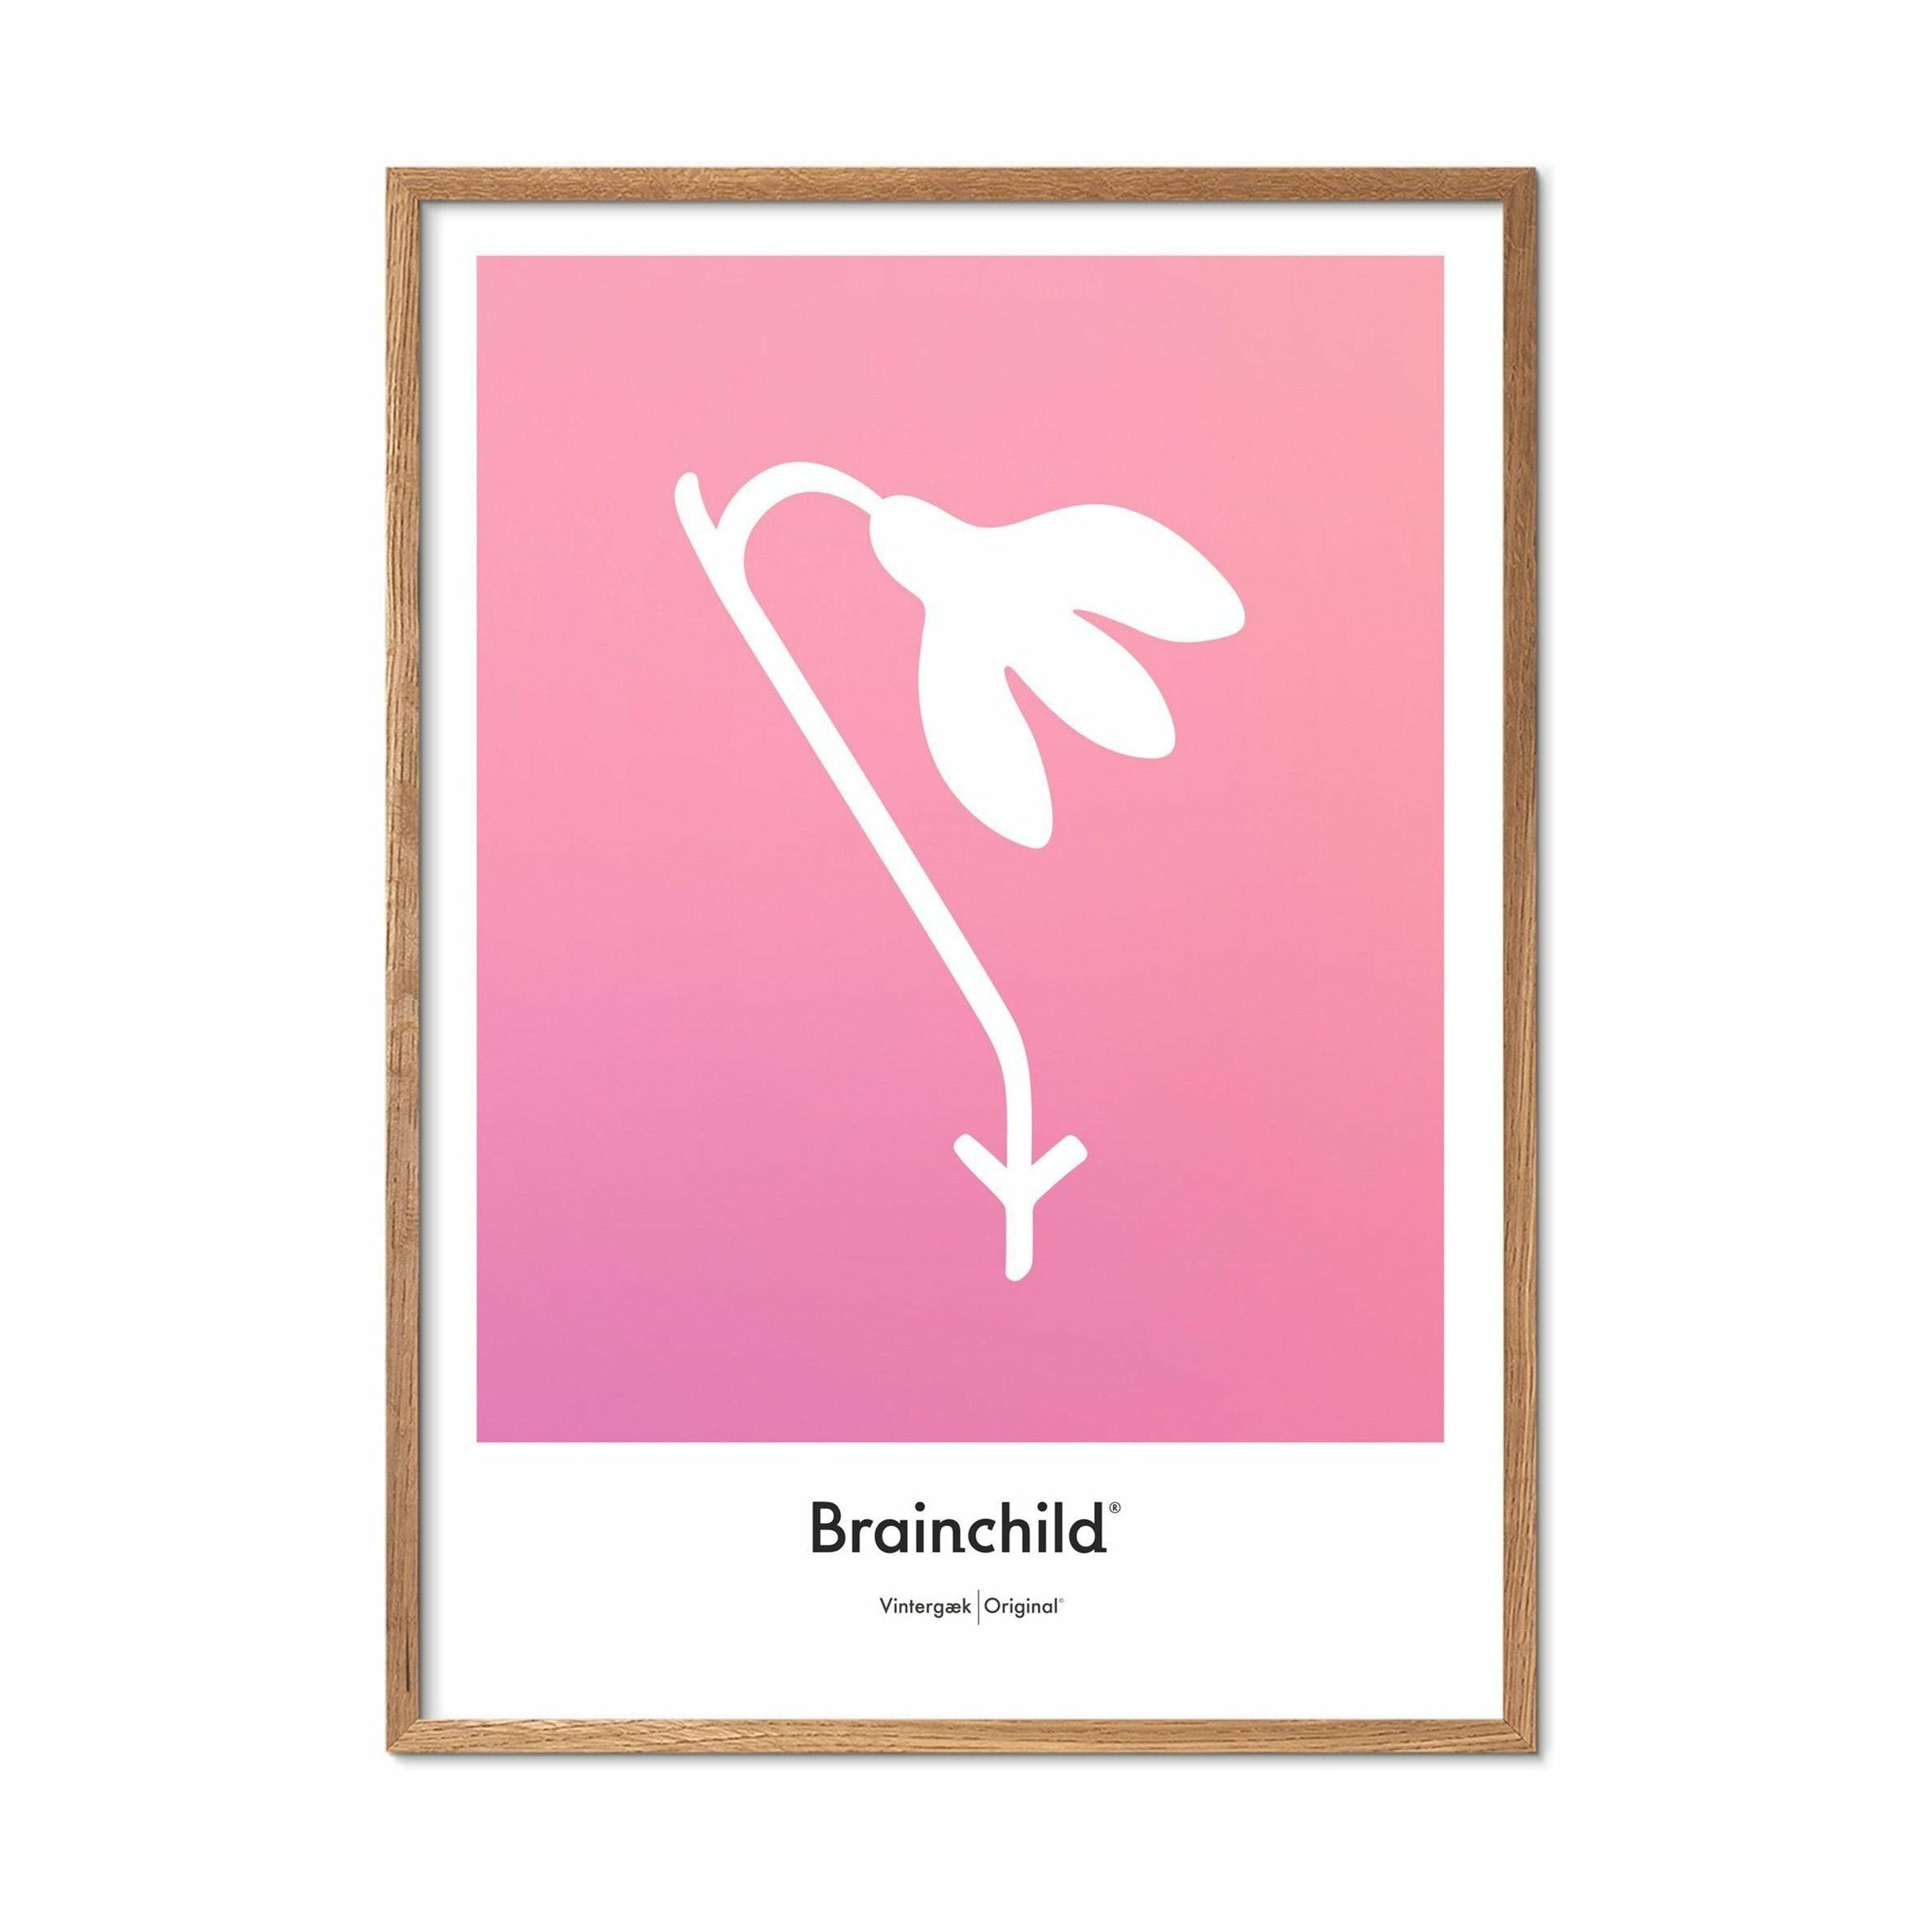 Brainchild Snowdrop Design Icon Poster, Frame Made Of Light Wood 50x70 Cm, Pink